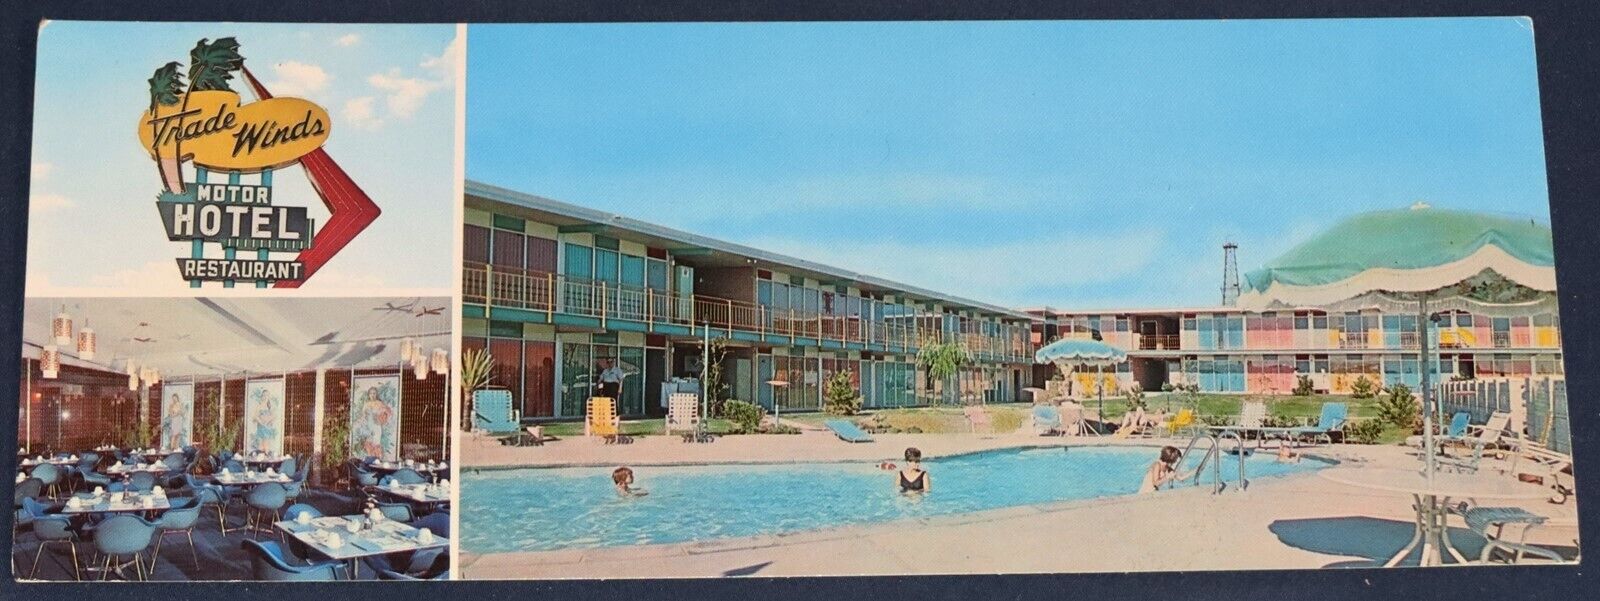 Trade Winds Motor Hotel, Oklahoma City, OK Postcard - Double Wide